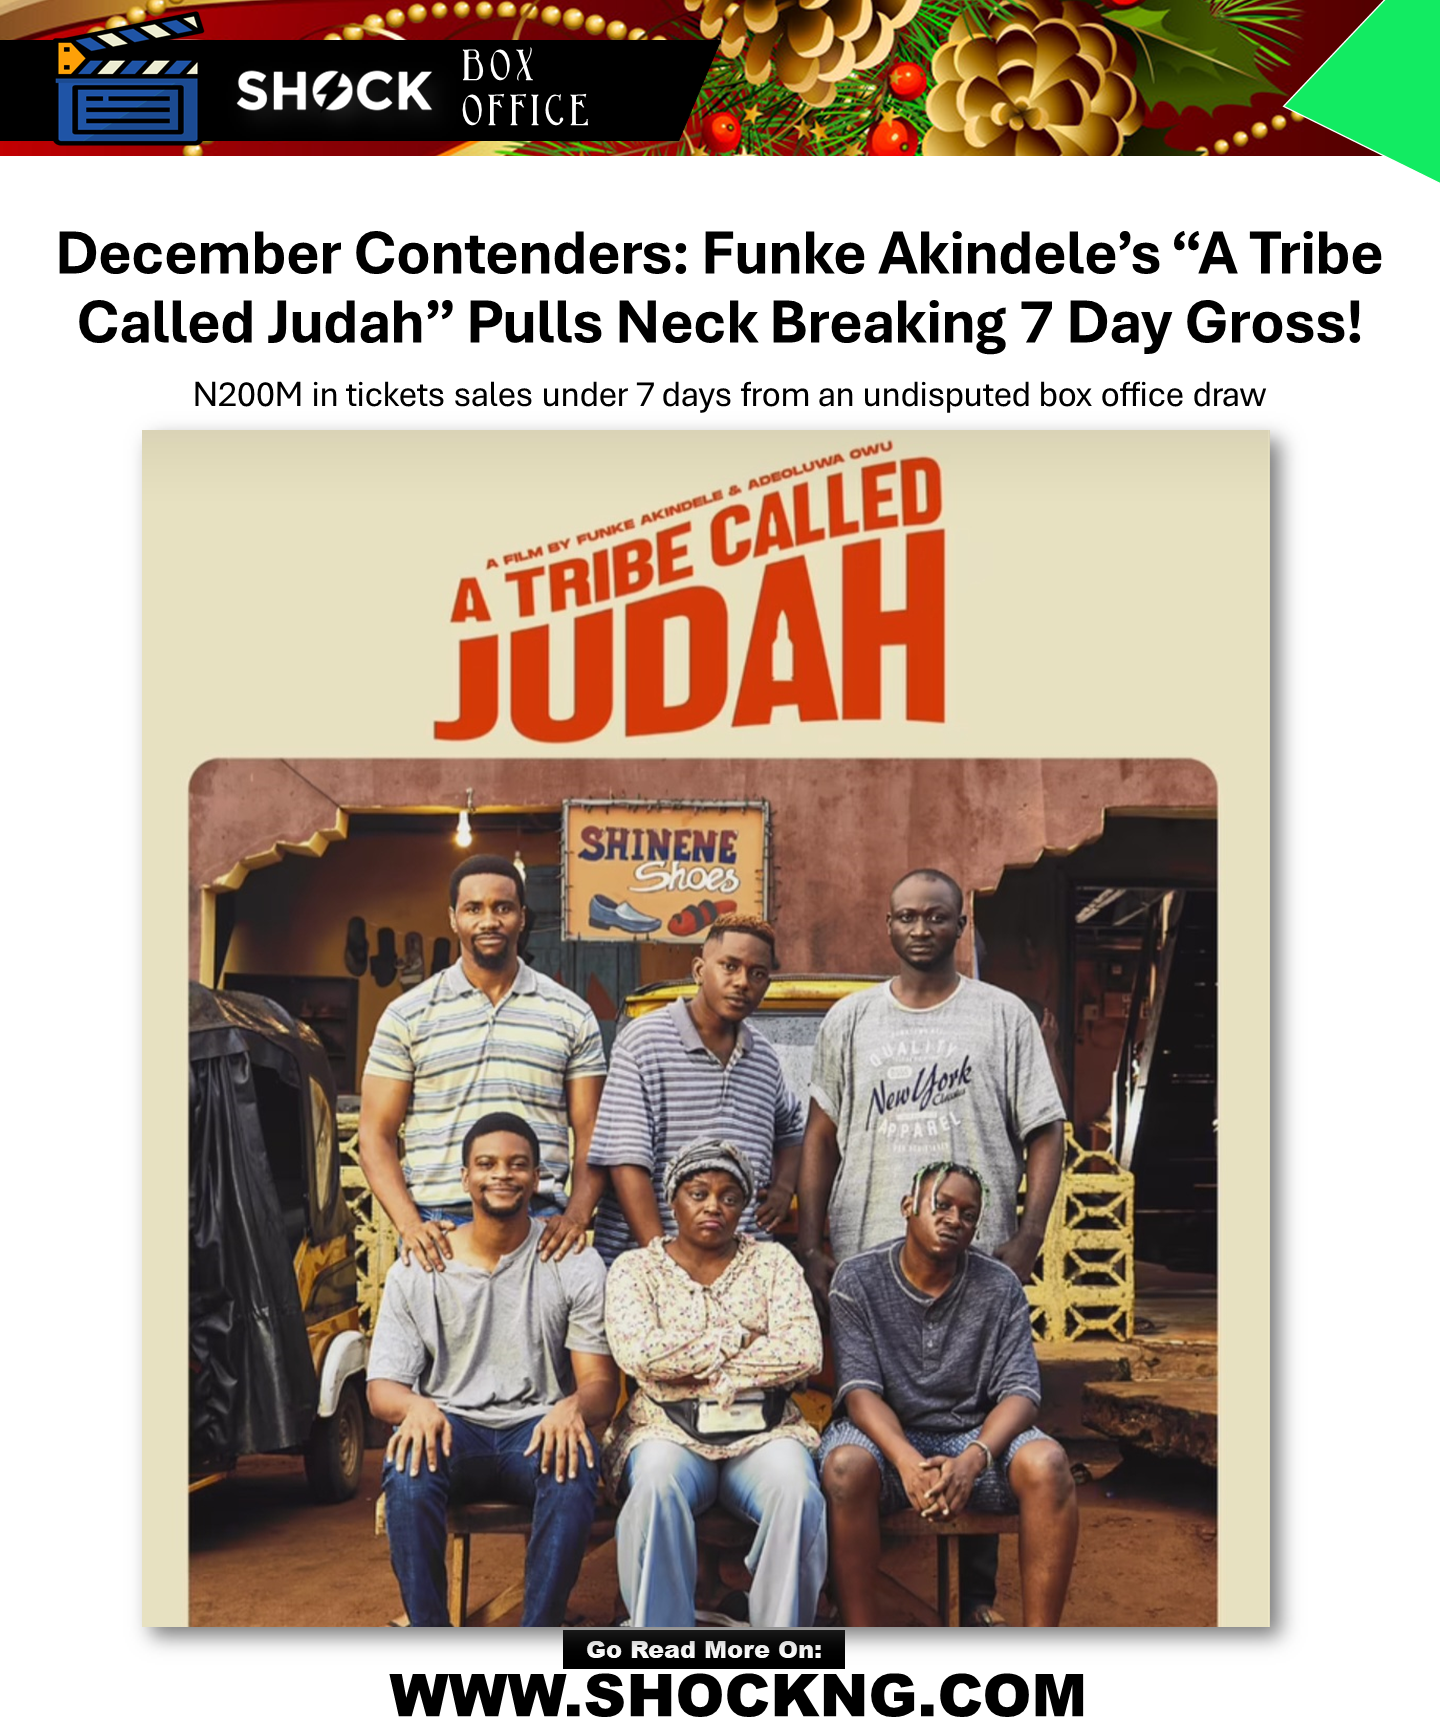 A tribe called judah movie